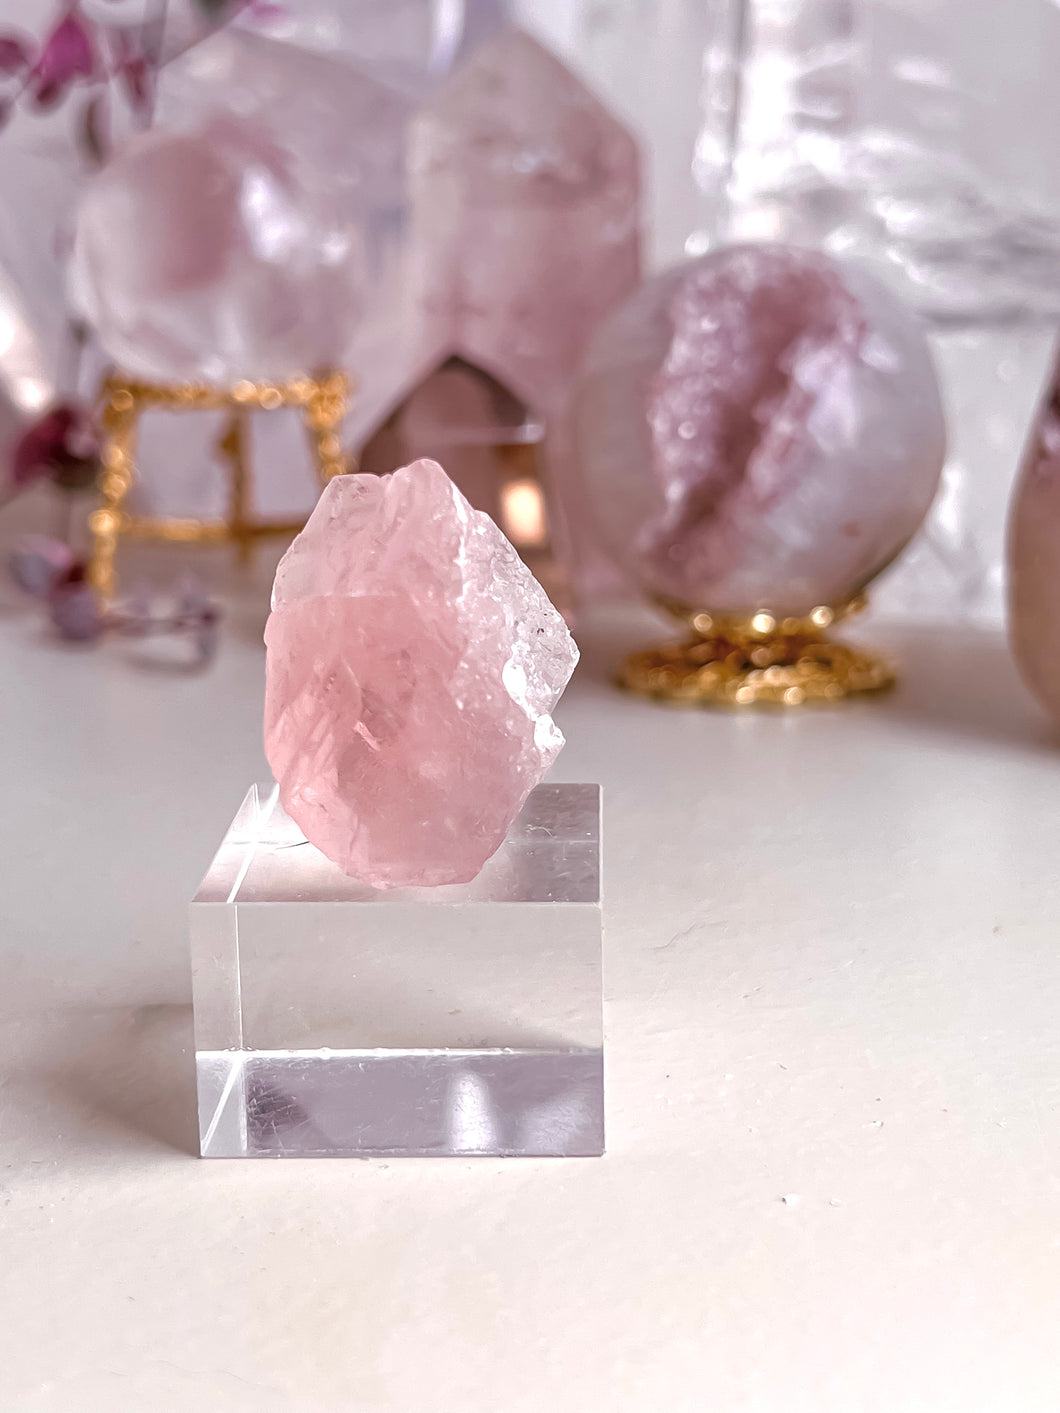 Rare Pink Fluorite